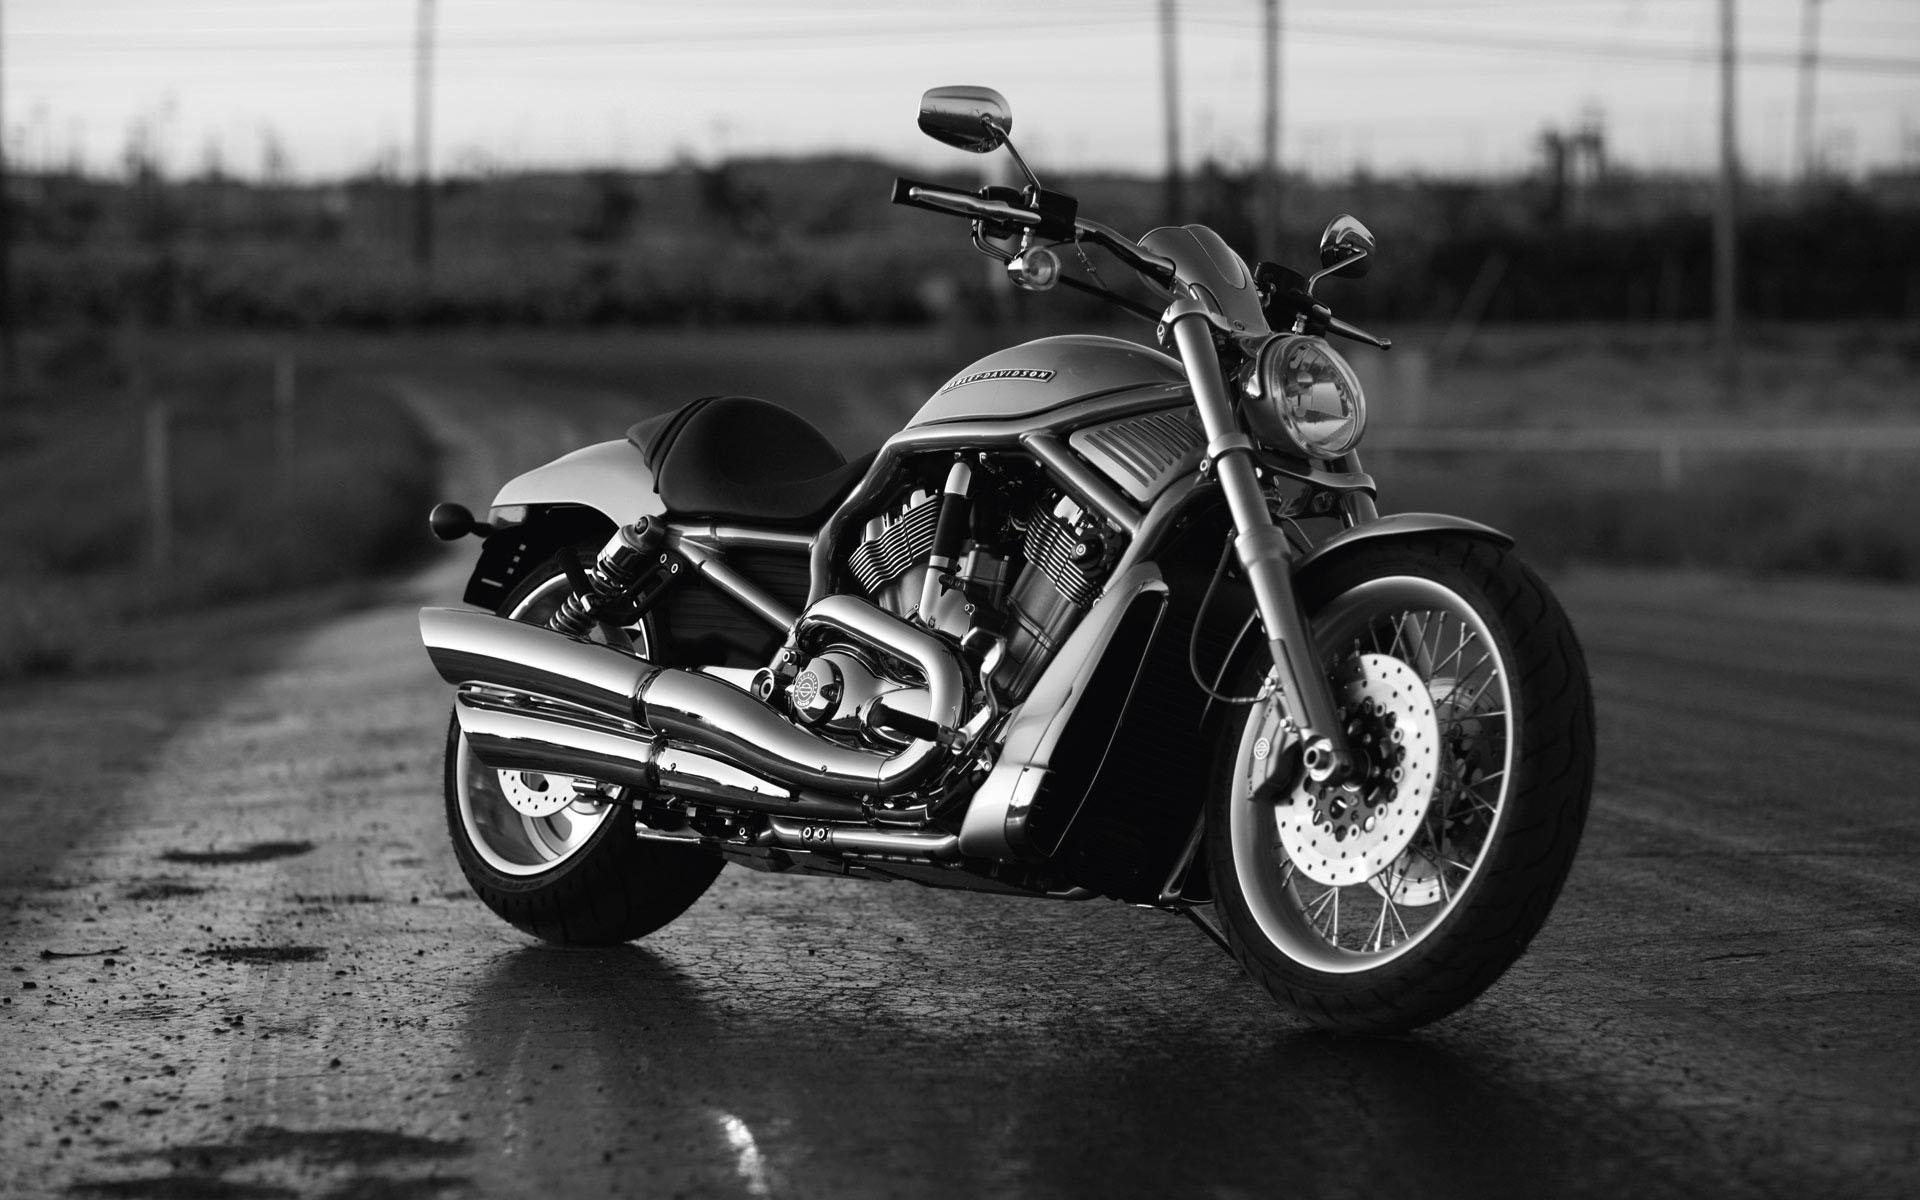 Harley Davidson motorcycle | PixelsTalk.Net